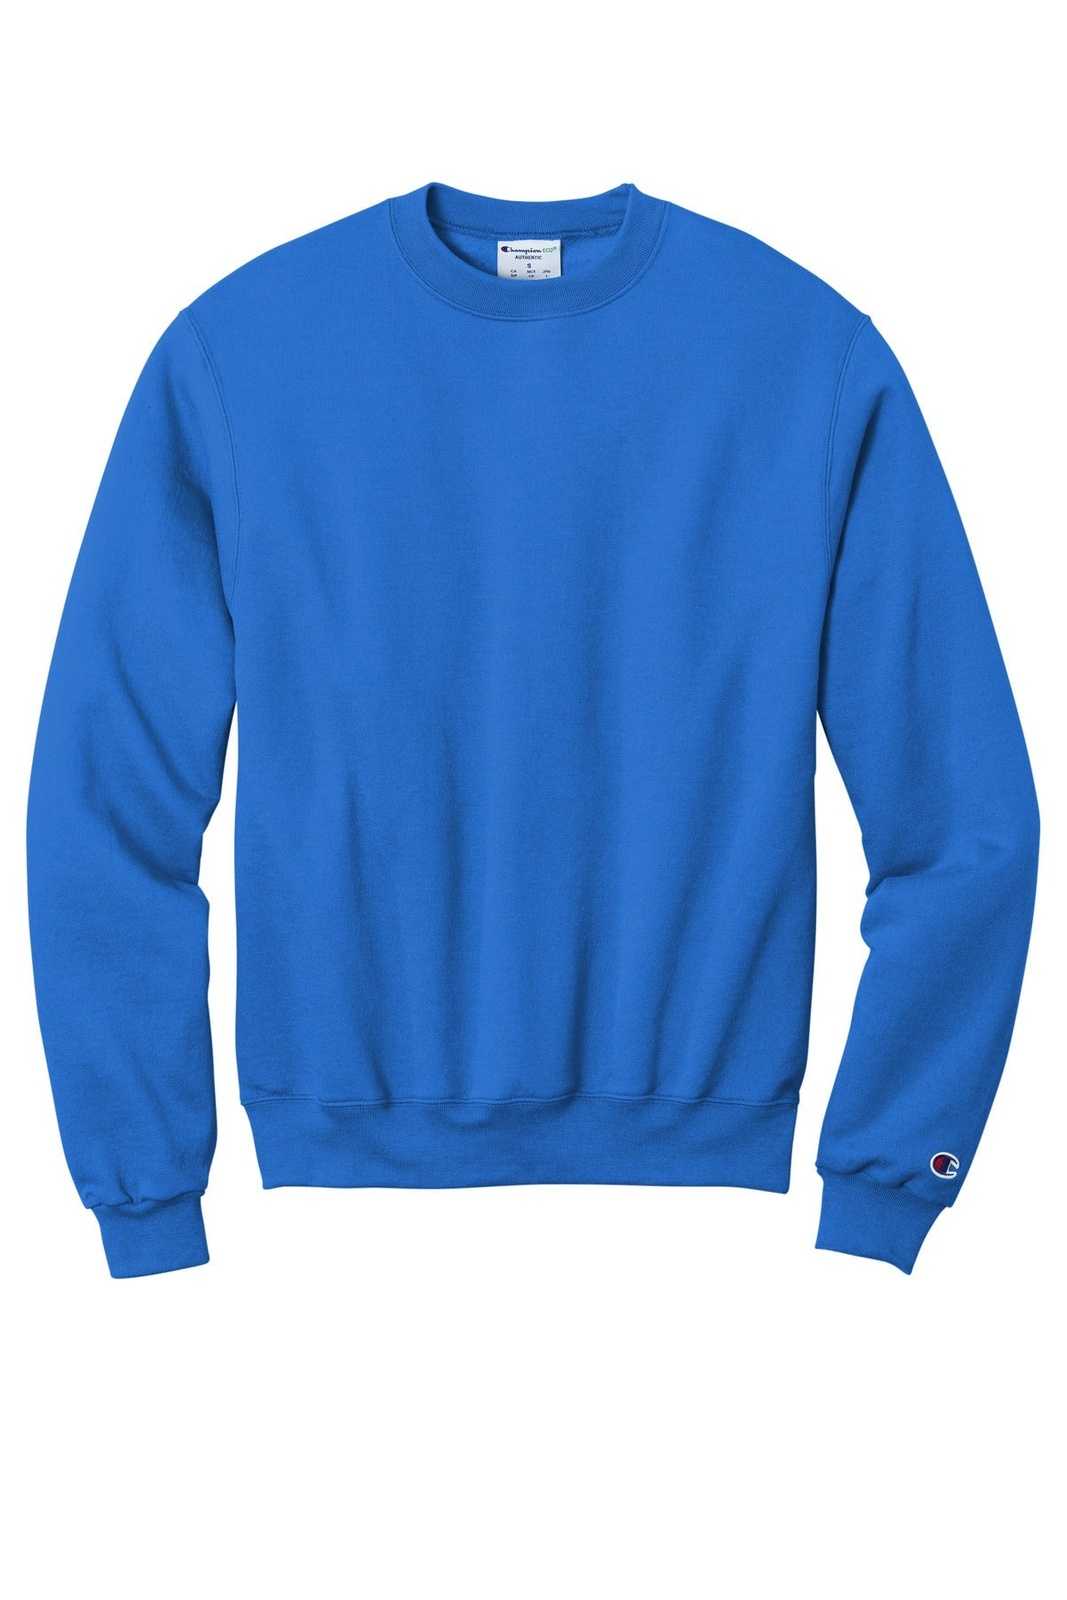 Champion Powerblend Crewneck Sweatshirt Royal Blue